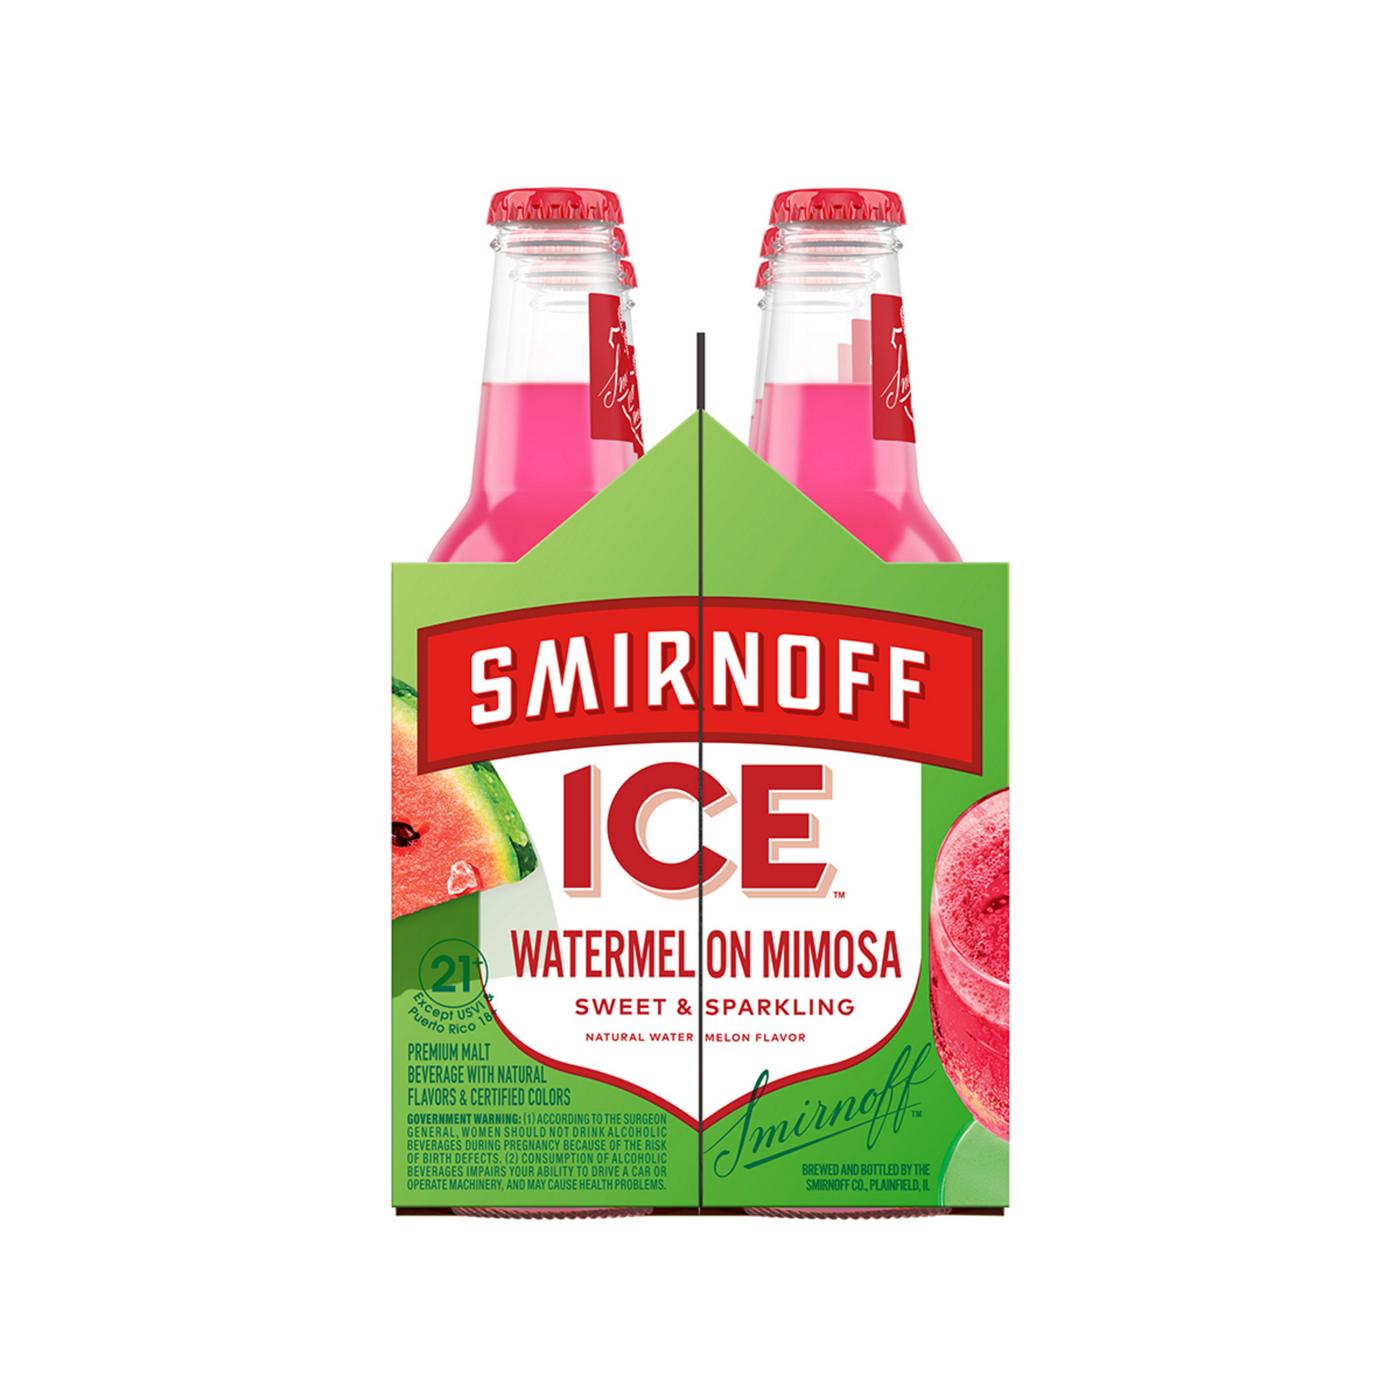 Smirnoff Ice Watermelon Mimosa; image 3 of 5